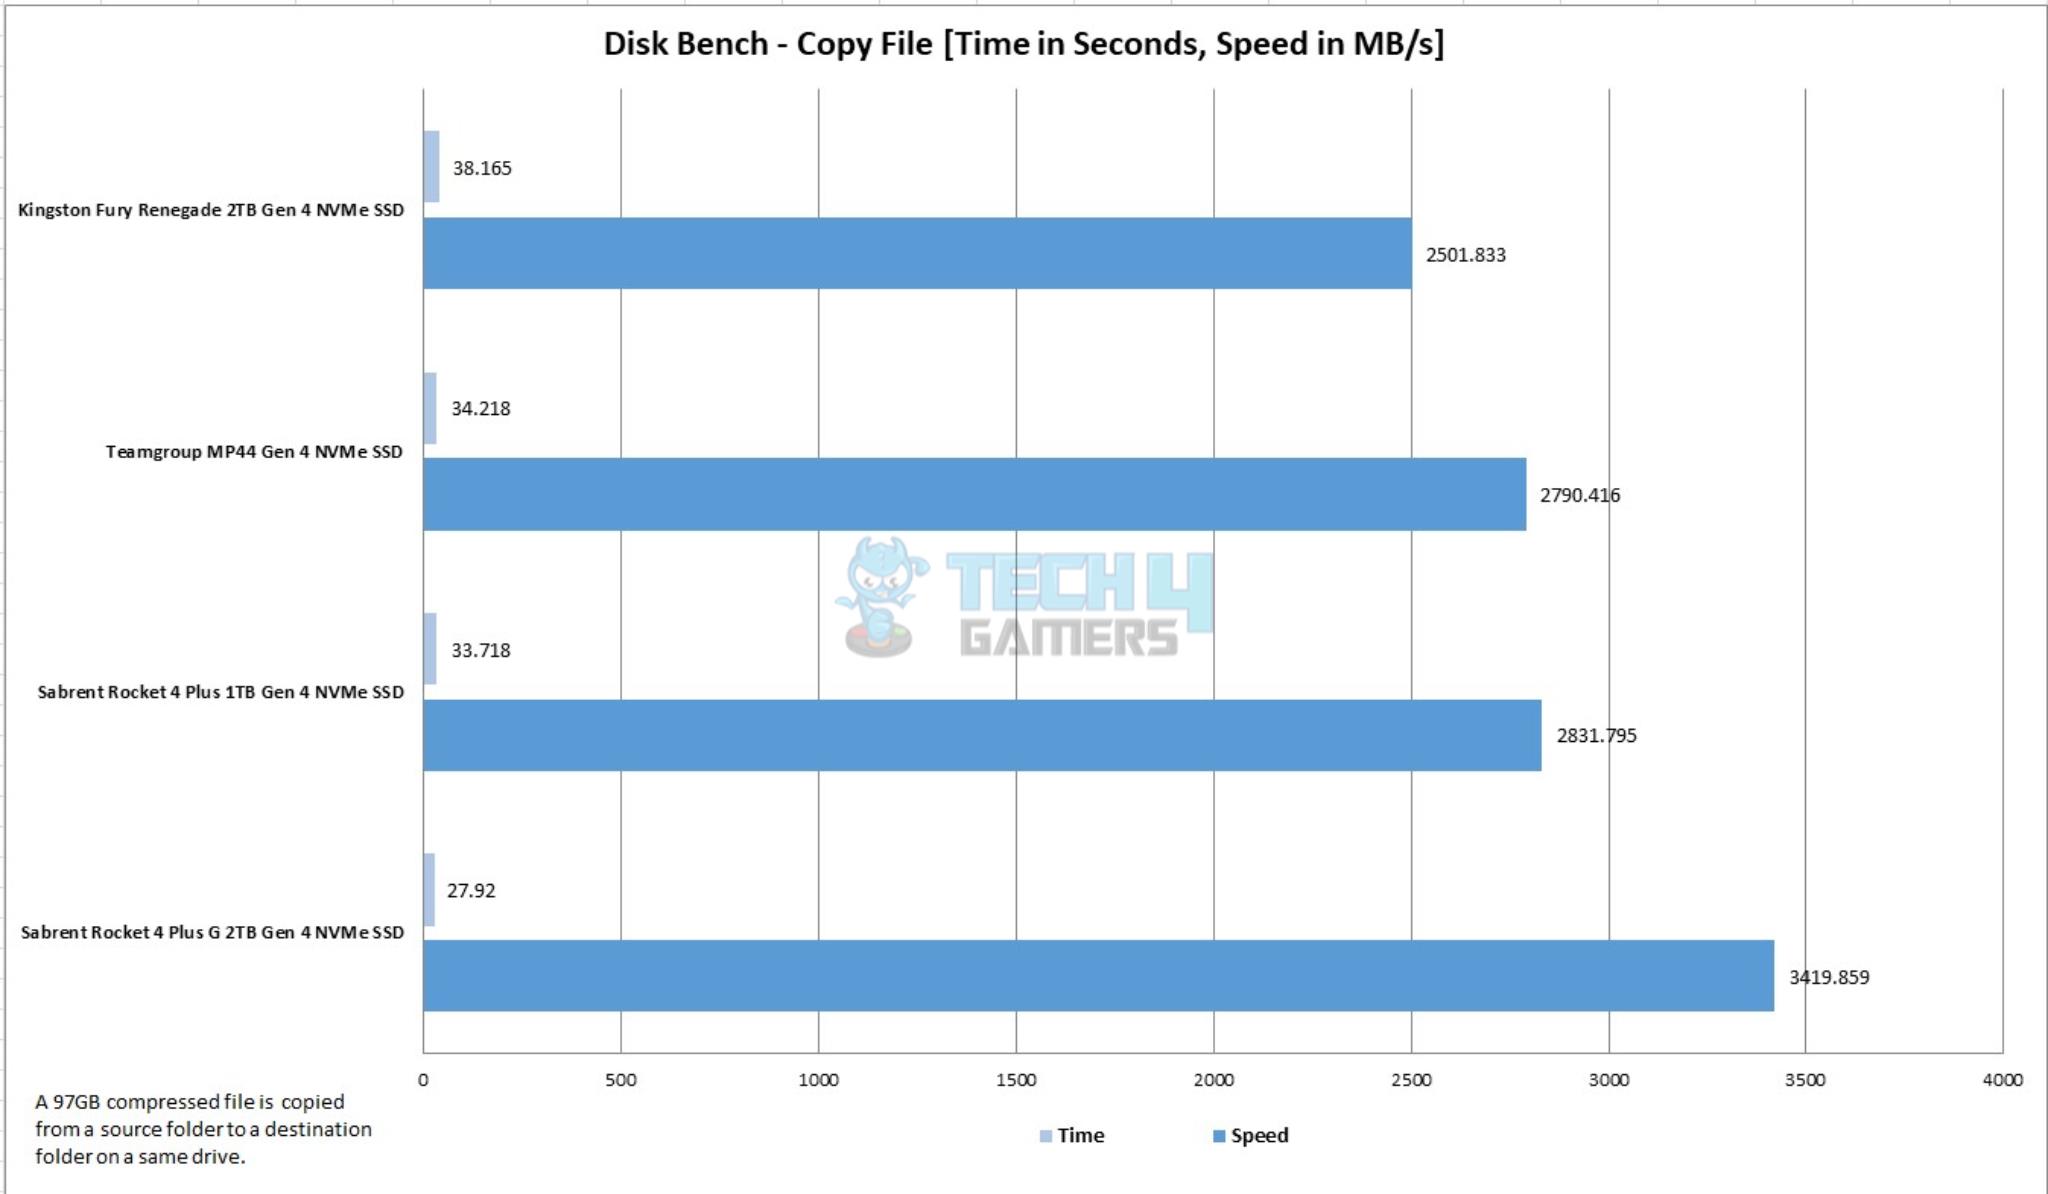 Sabrent Rocket 4 Plus G 2TB NVMe SSD — Disk Bench Copy File